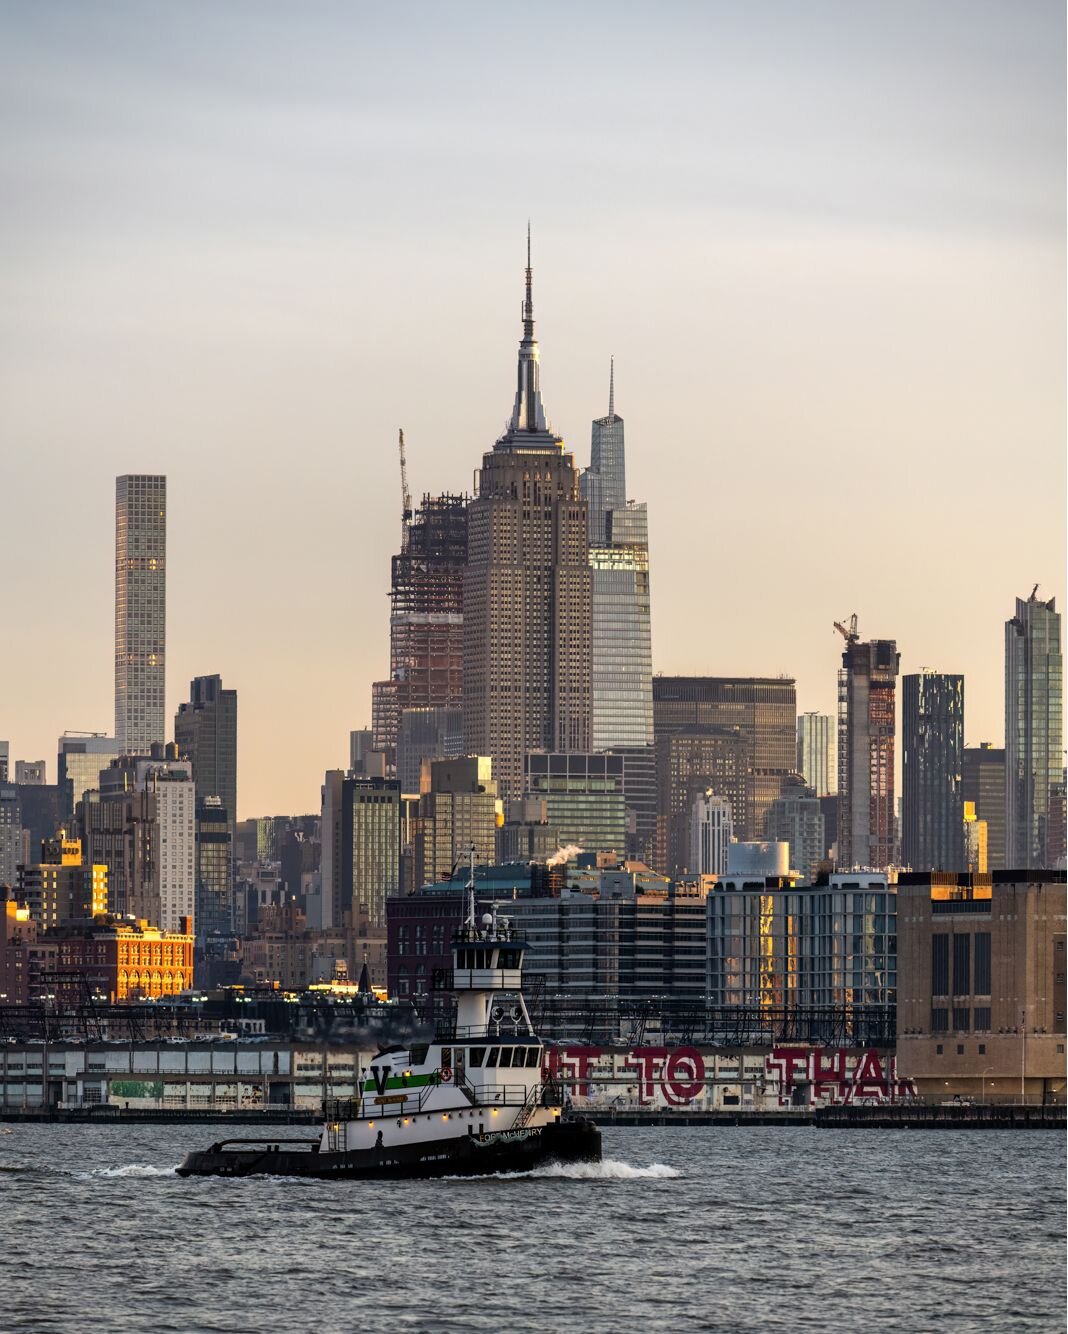 A new skyscraper is raising up in 5x speed
#NewYorkCity #WhatsGoodNYC #VisitNYC #NYCTourism #NYCorNowhere⁠ #ILoveNY #NikonNoFilter #NikonCreators #NikonZCreators #NIKKORZ 
#YourShotPhotographer #TLPicks #NikonZ7